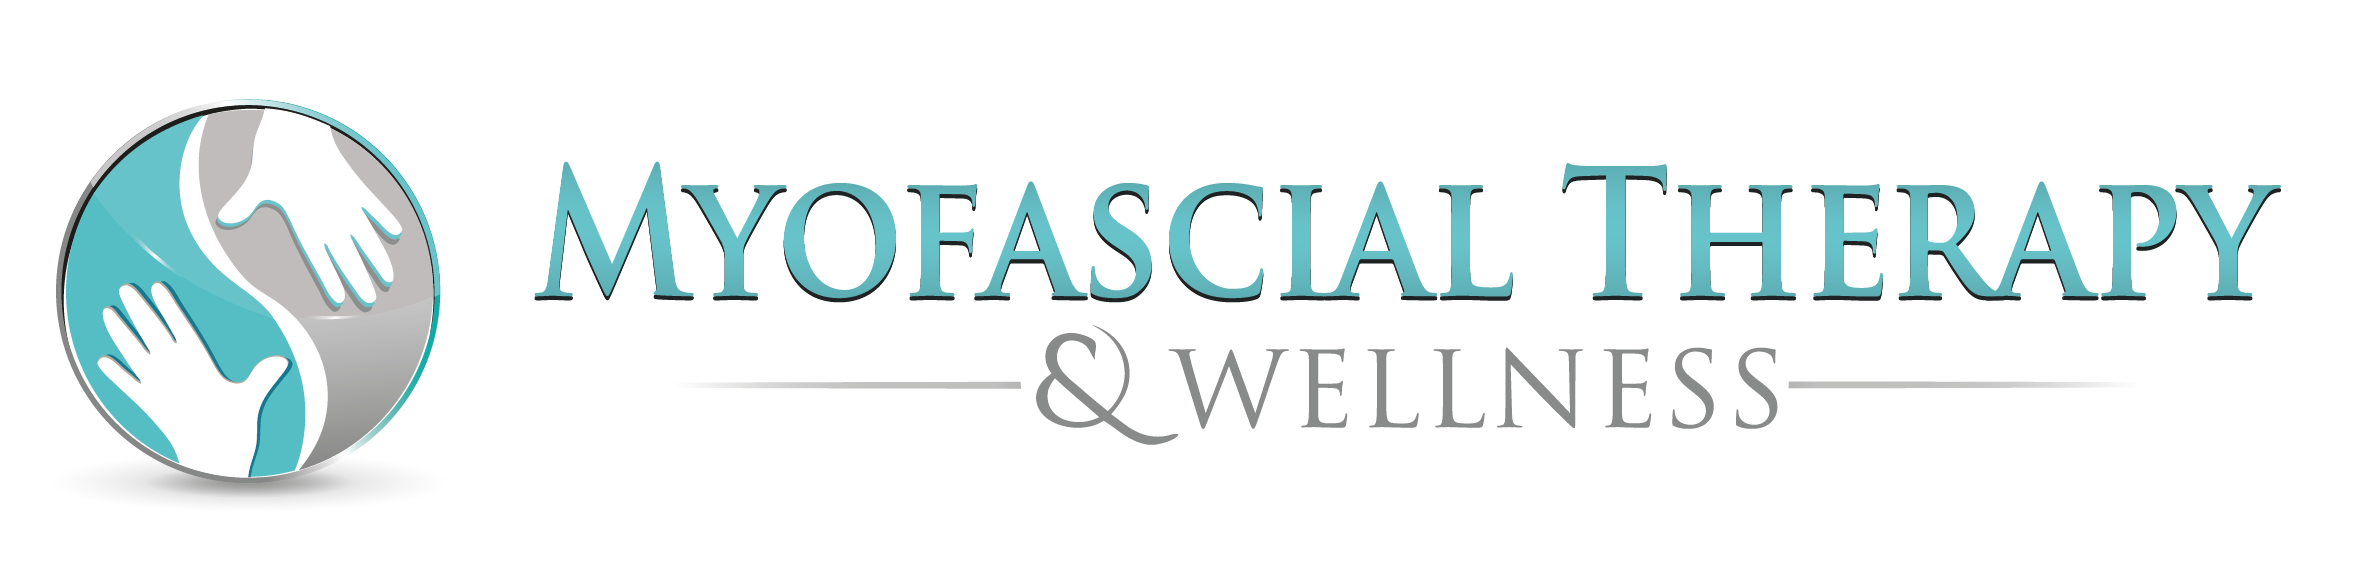 Myofascial Therapy & Wellness